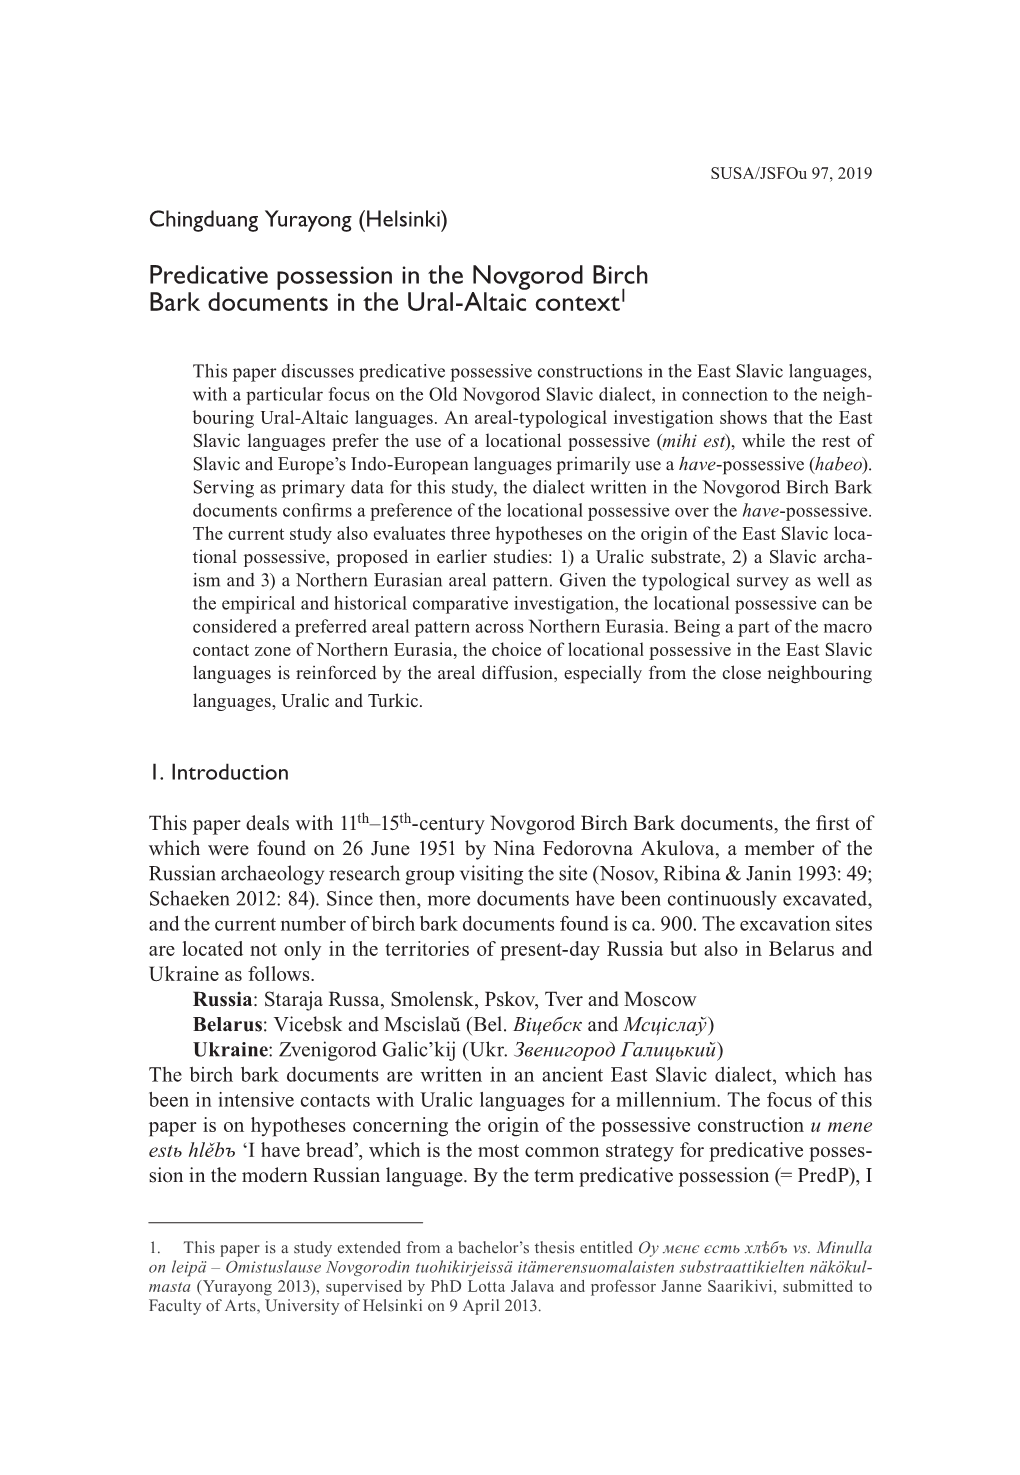 Predicative Possession in the Novgorod Birch Bark Documents in the Ural-Altaic Context1